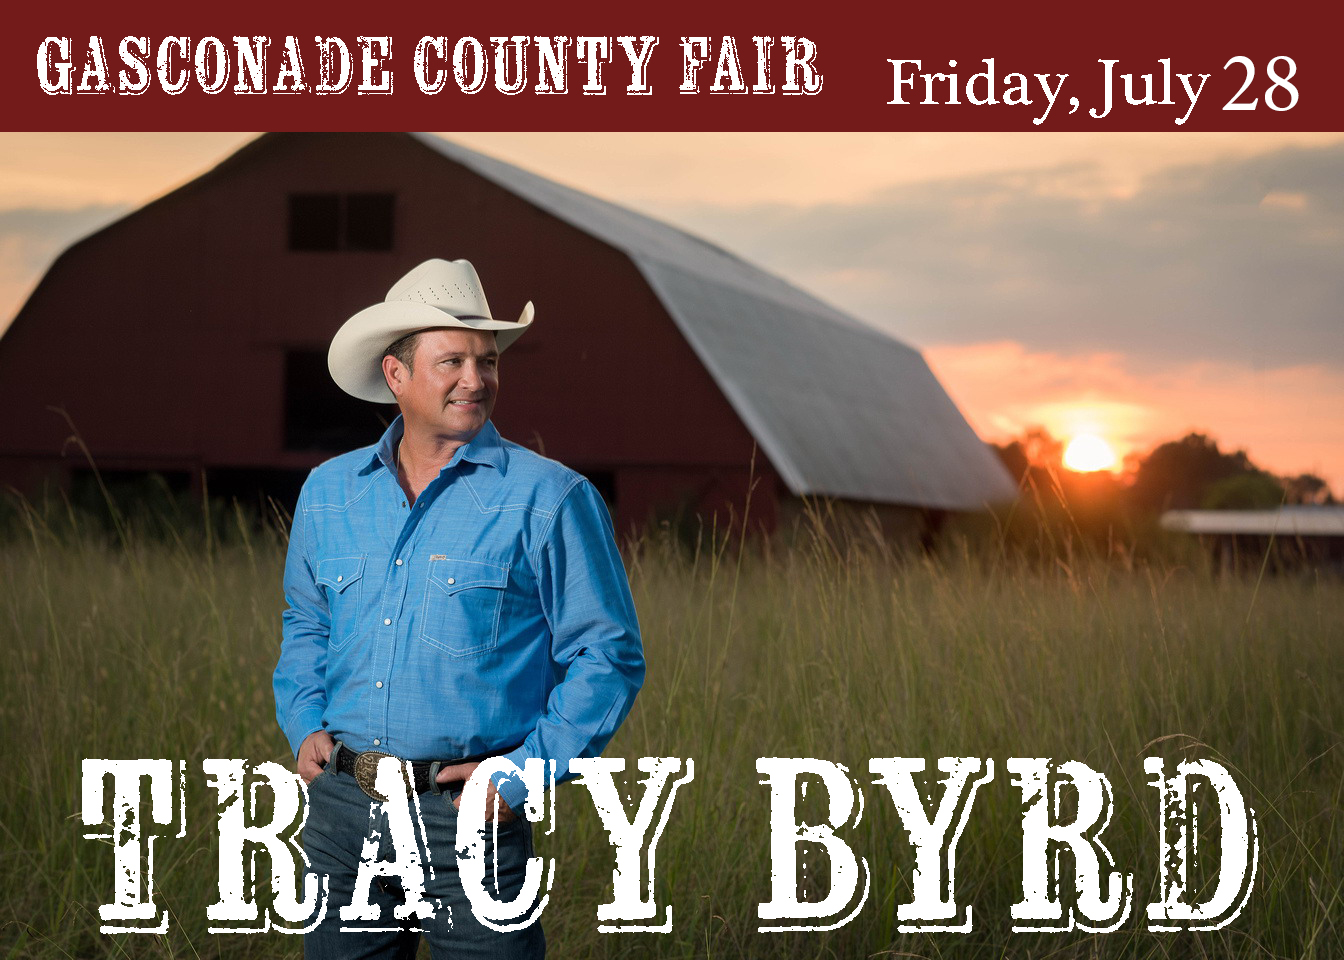 Tracy Byrd will be headlining the Gasconade County Fair Friday July 27. 